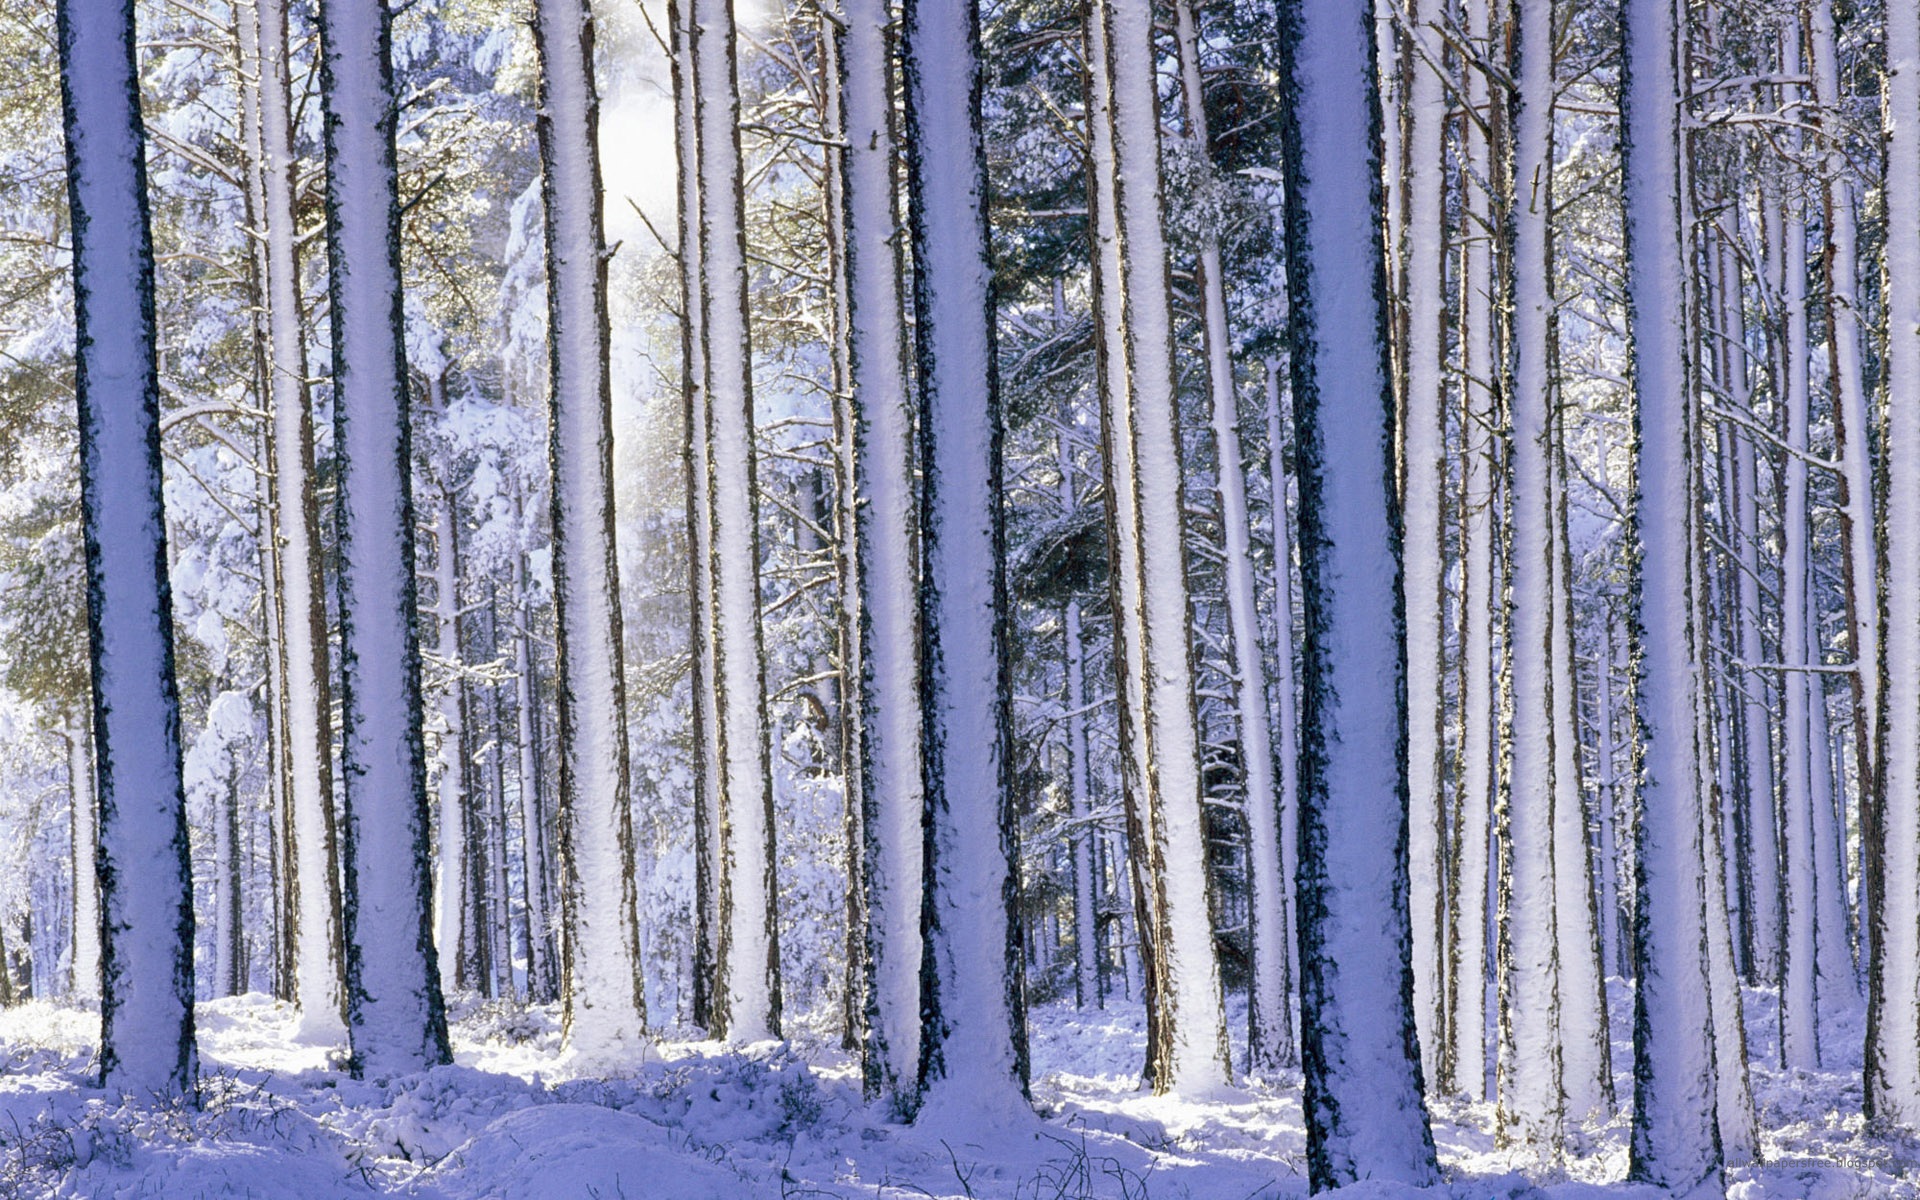 Download HQ Winter wallpaper / Nature / 1920x1200